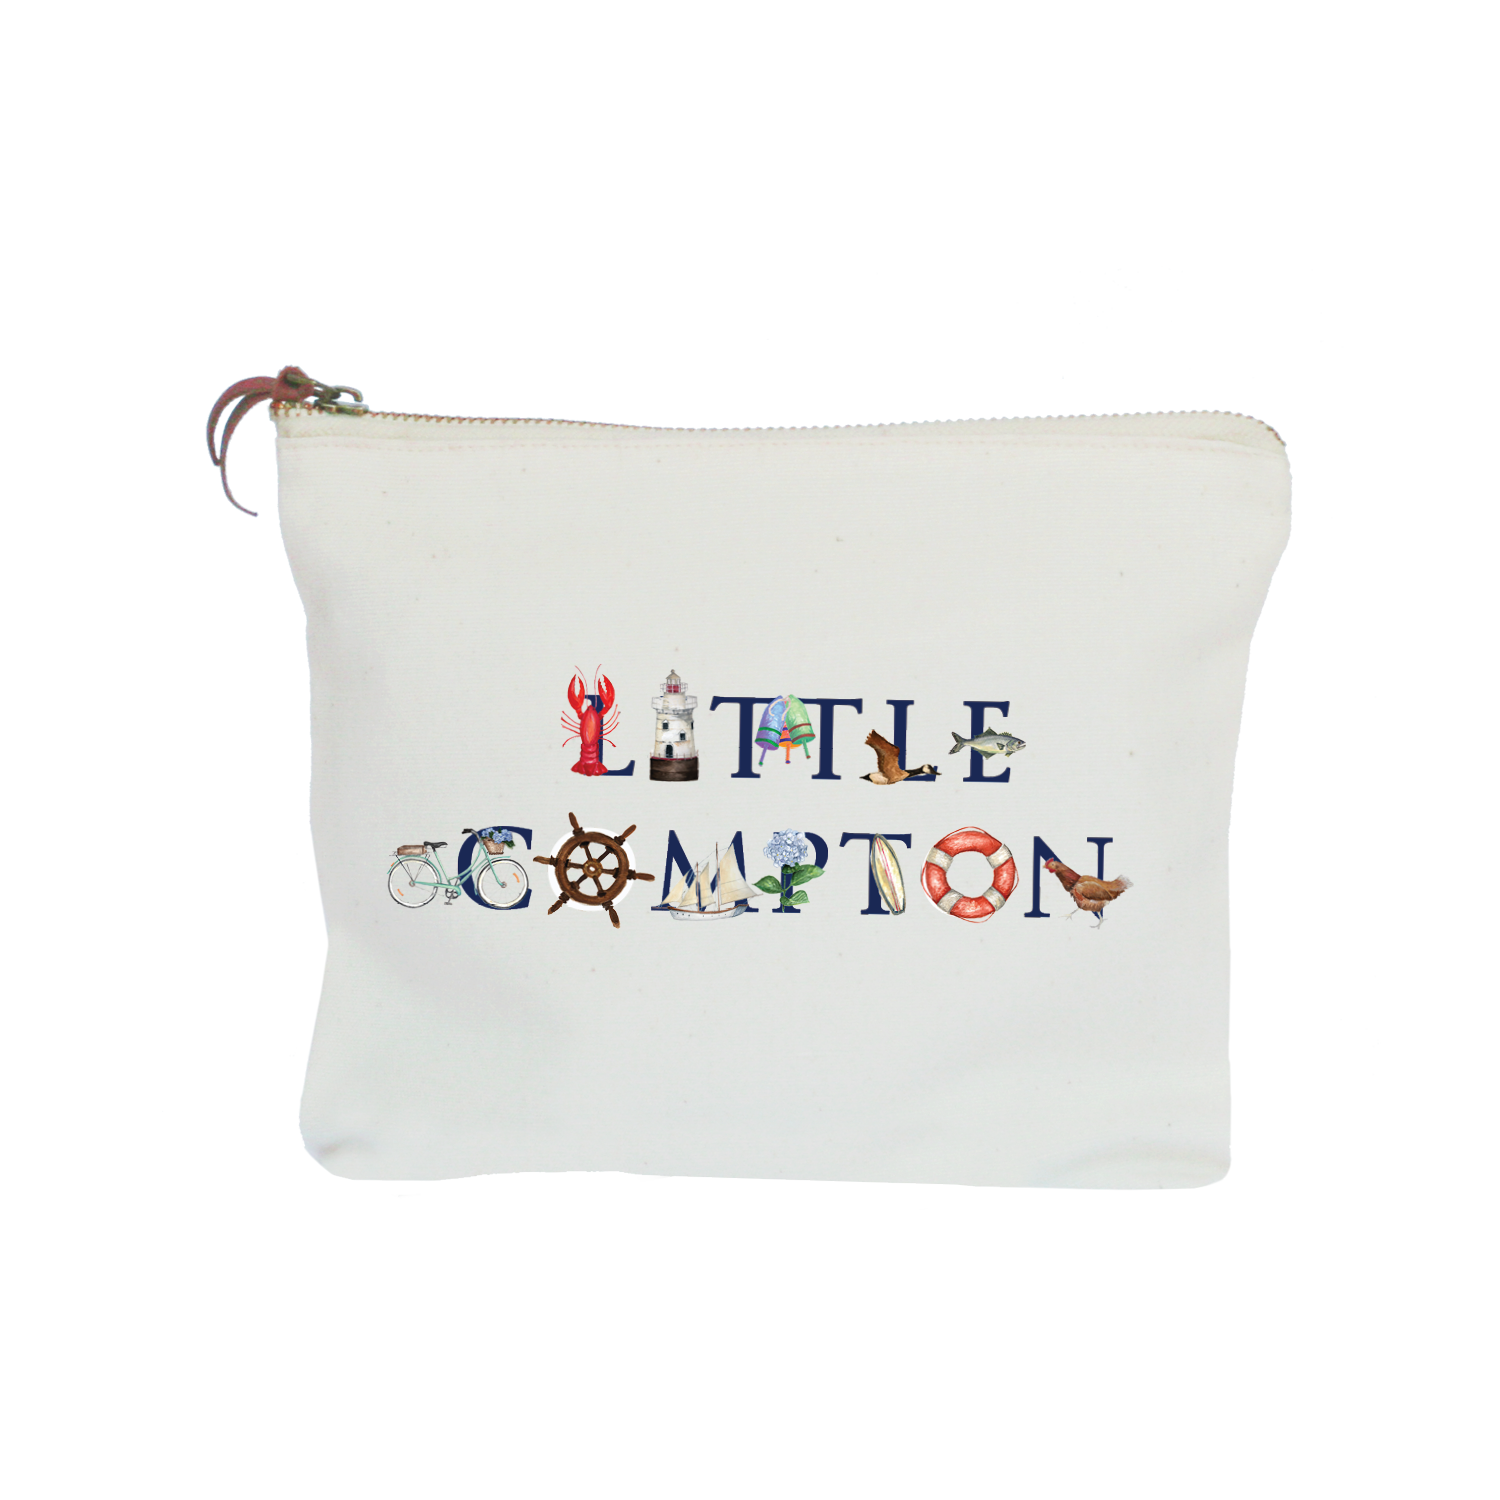 little compton zipper pouch